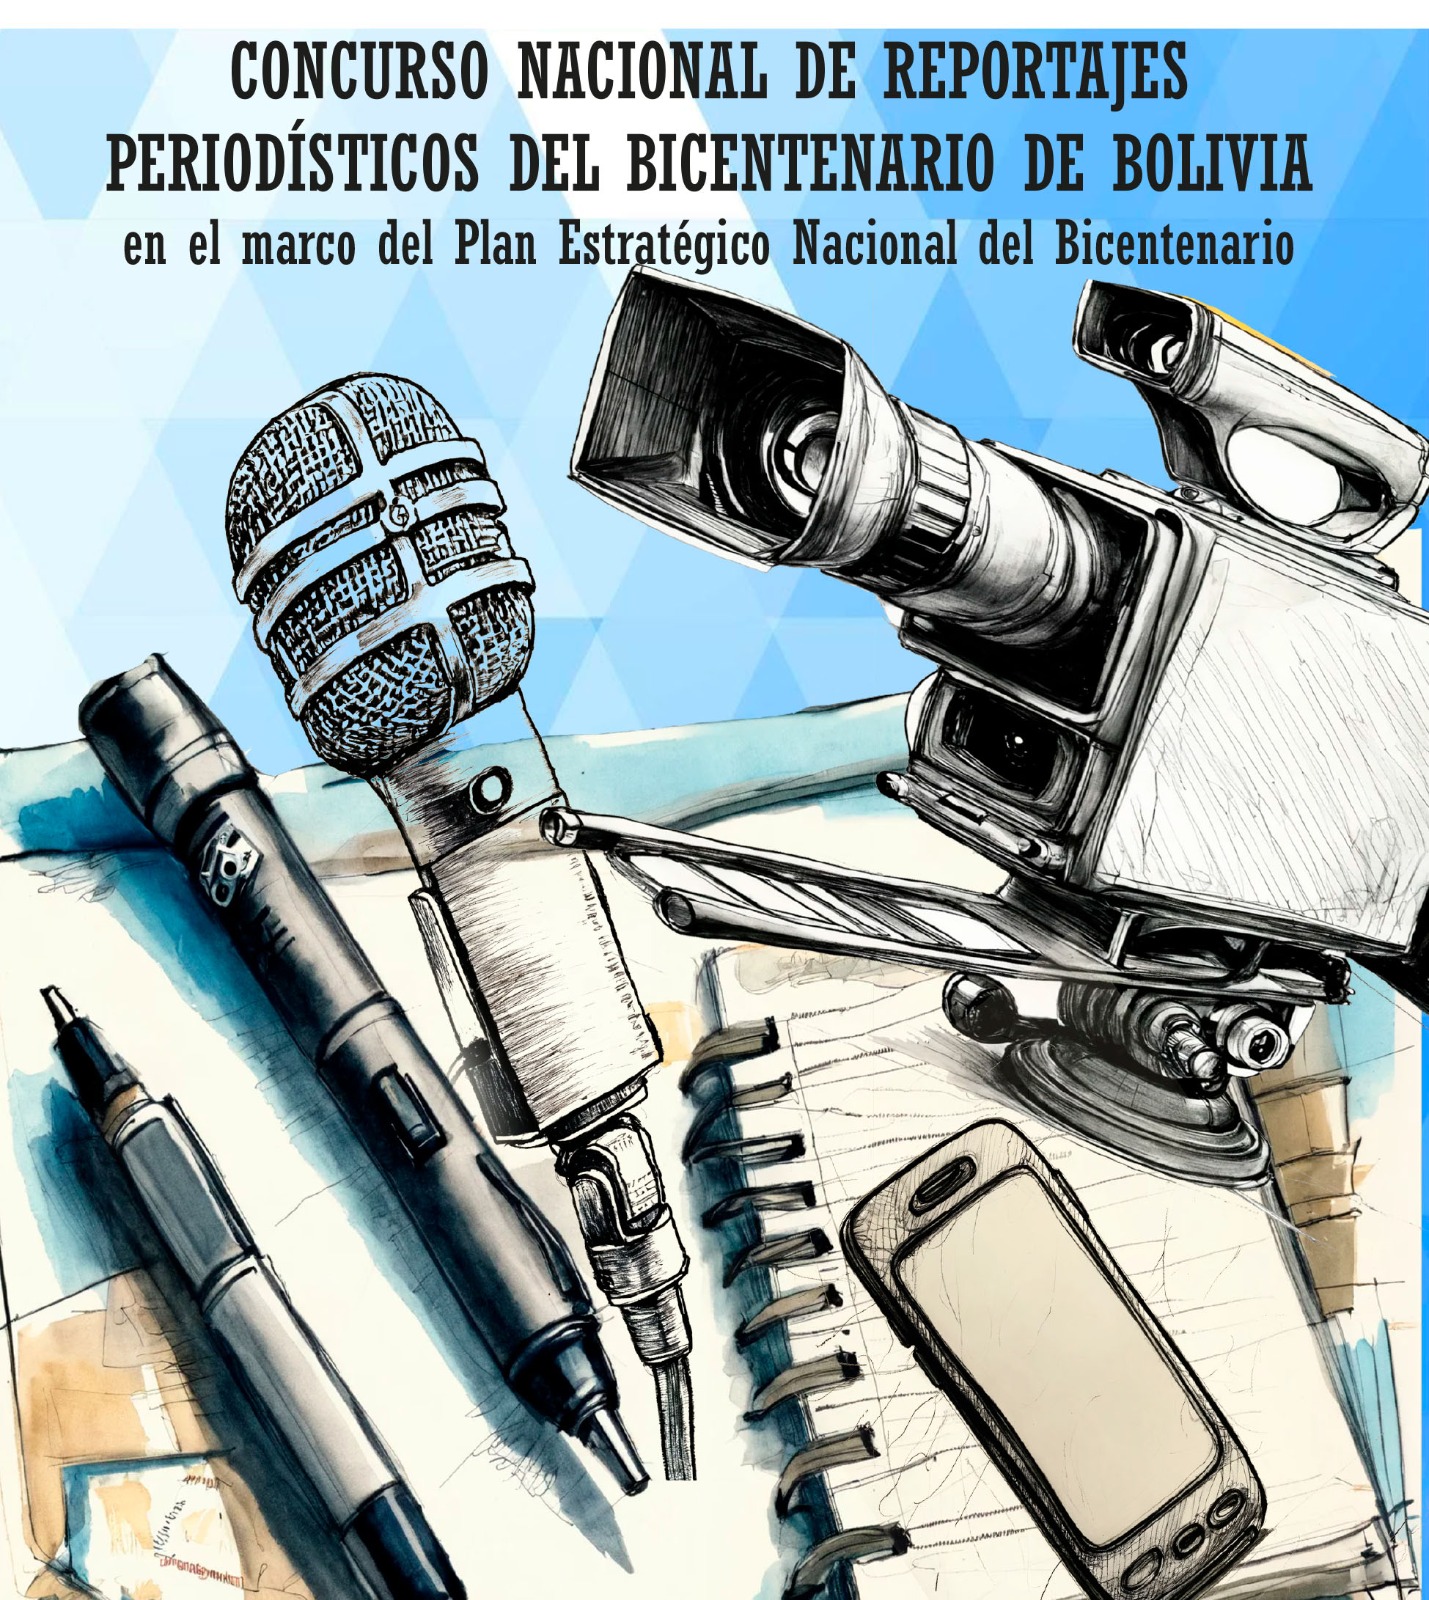 CONCURSO NACIONAL DE REPORTAJES PERIODÍSTICOS DEL BICENTENARIO DE BOLIVIA (Convocatoria)